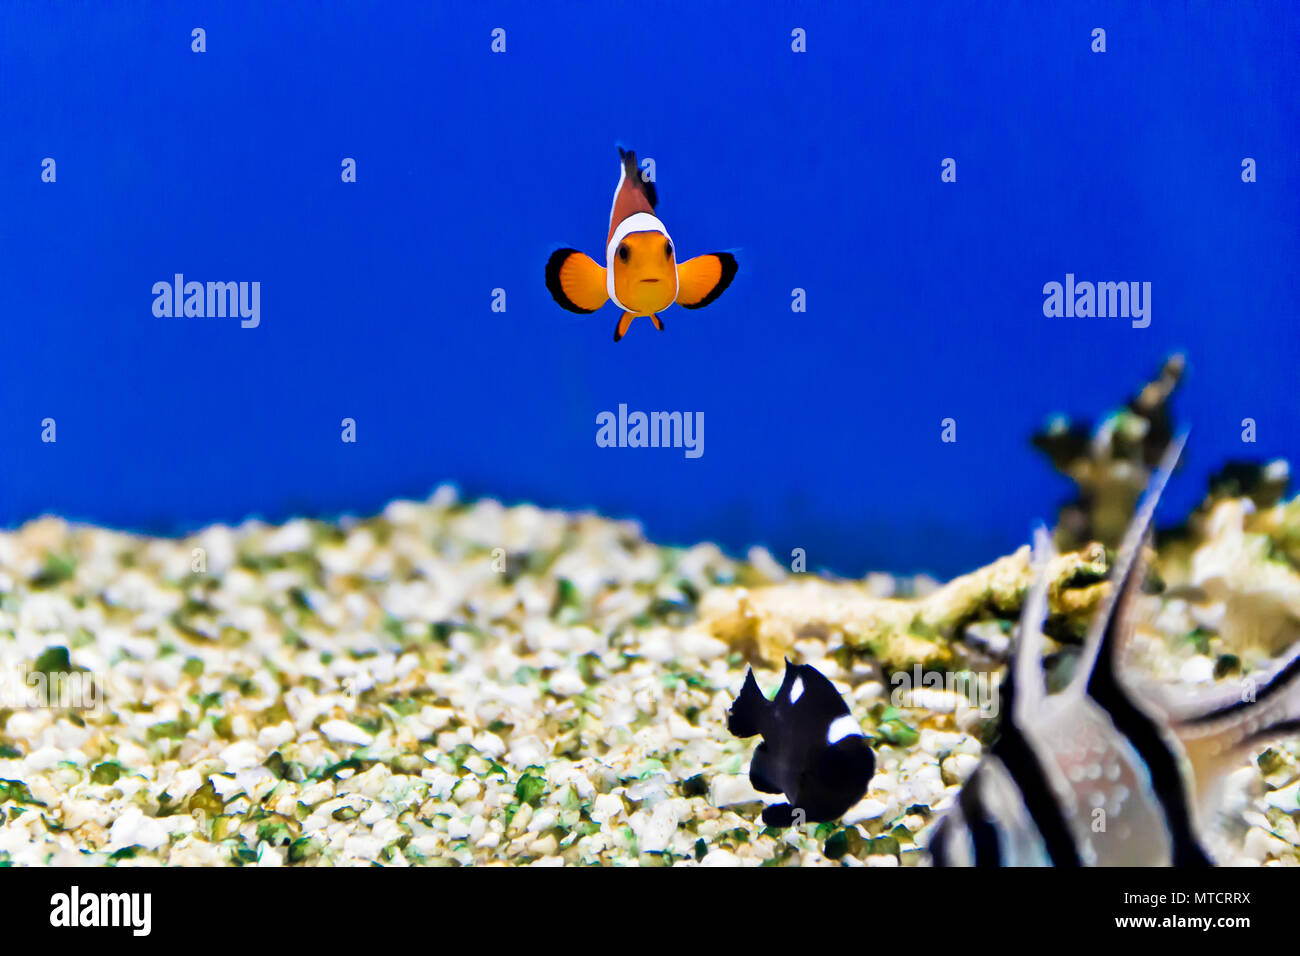 Horizontal photo of clown fish on aquarium bottom Stock Photo